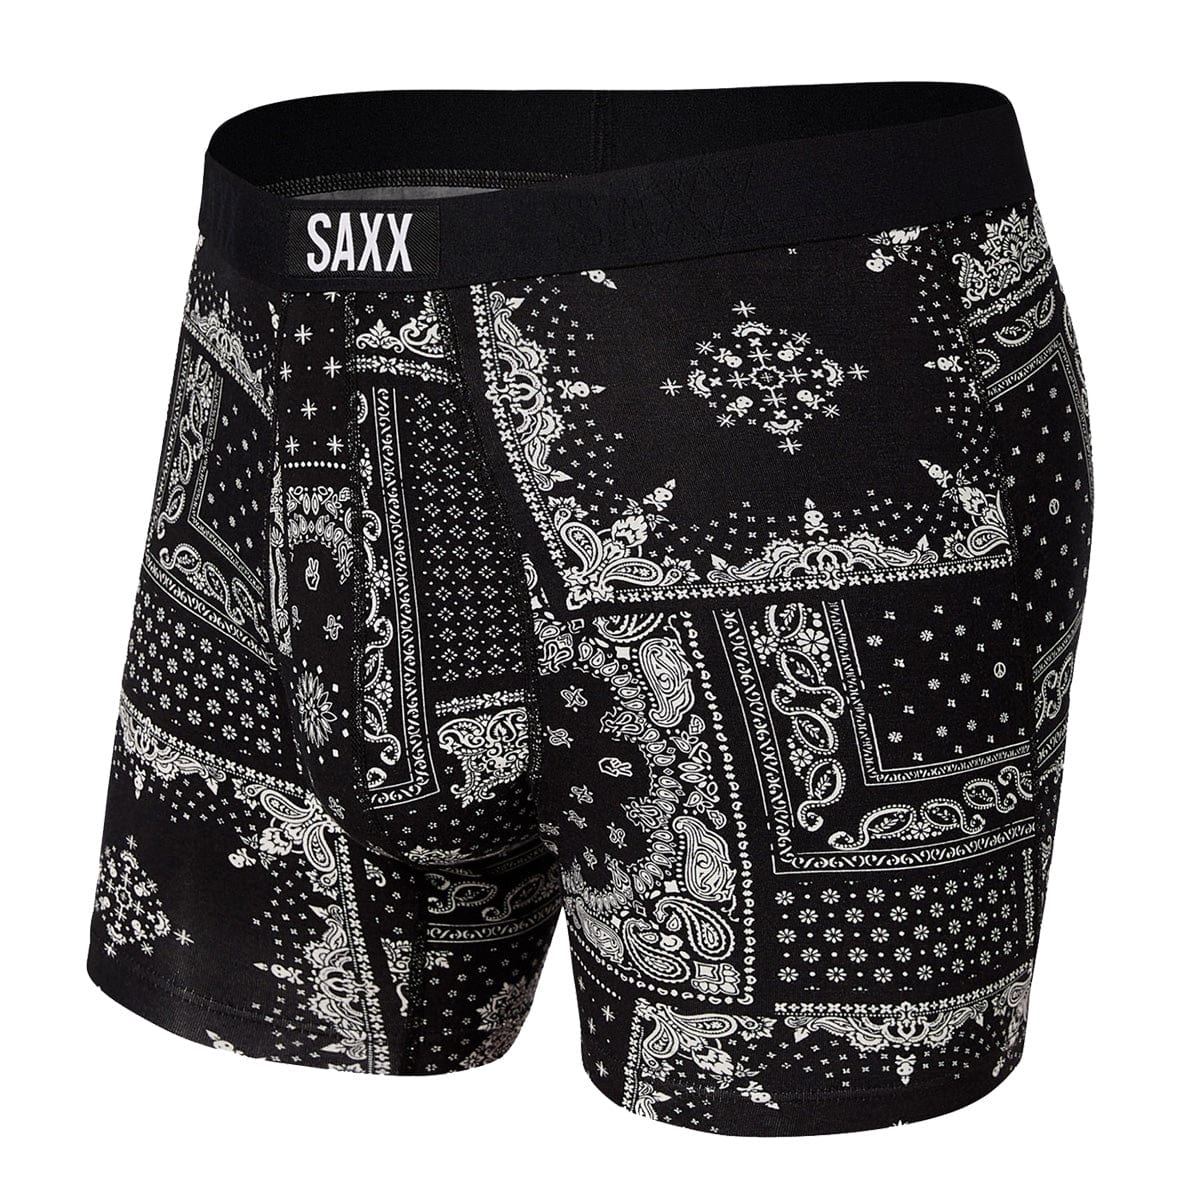 Saxx Vibe Boxers - Black Bandana Republic - The Hockey Shop Source For Sports